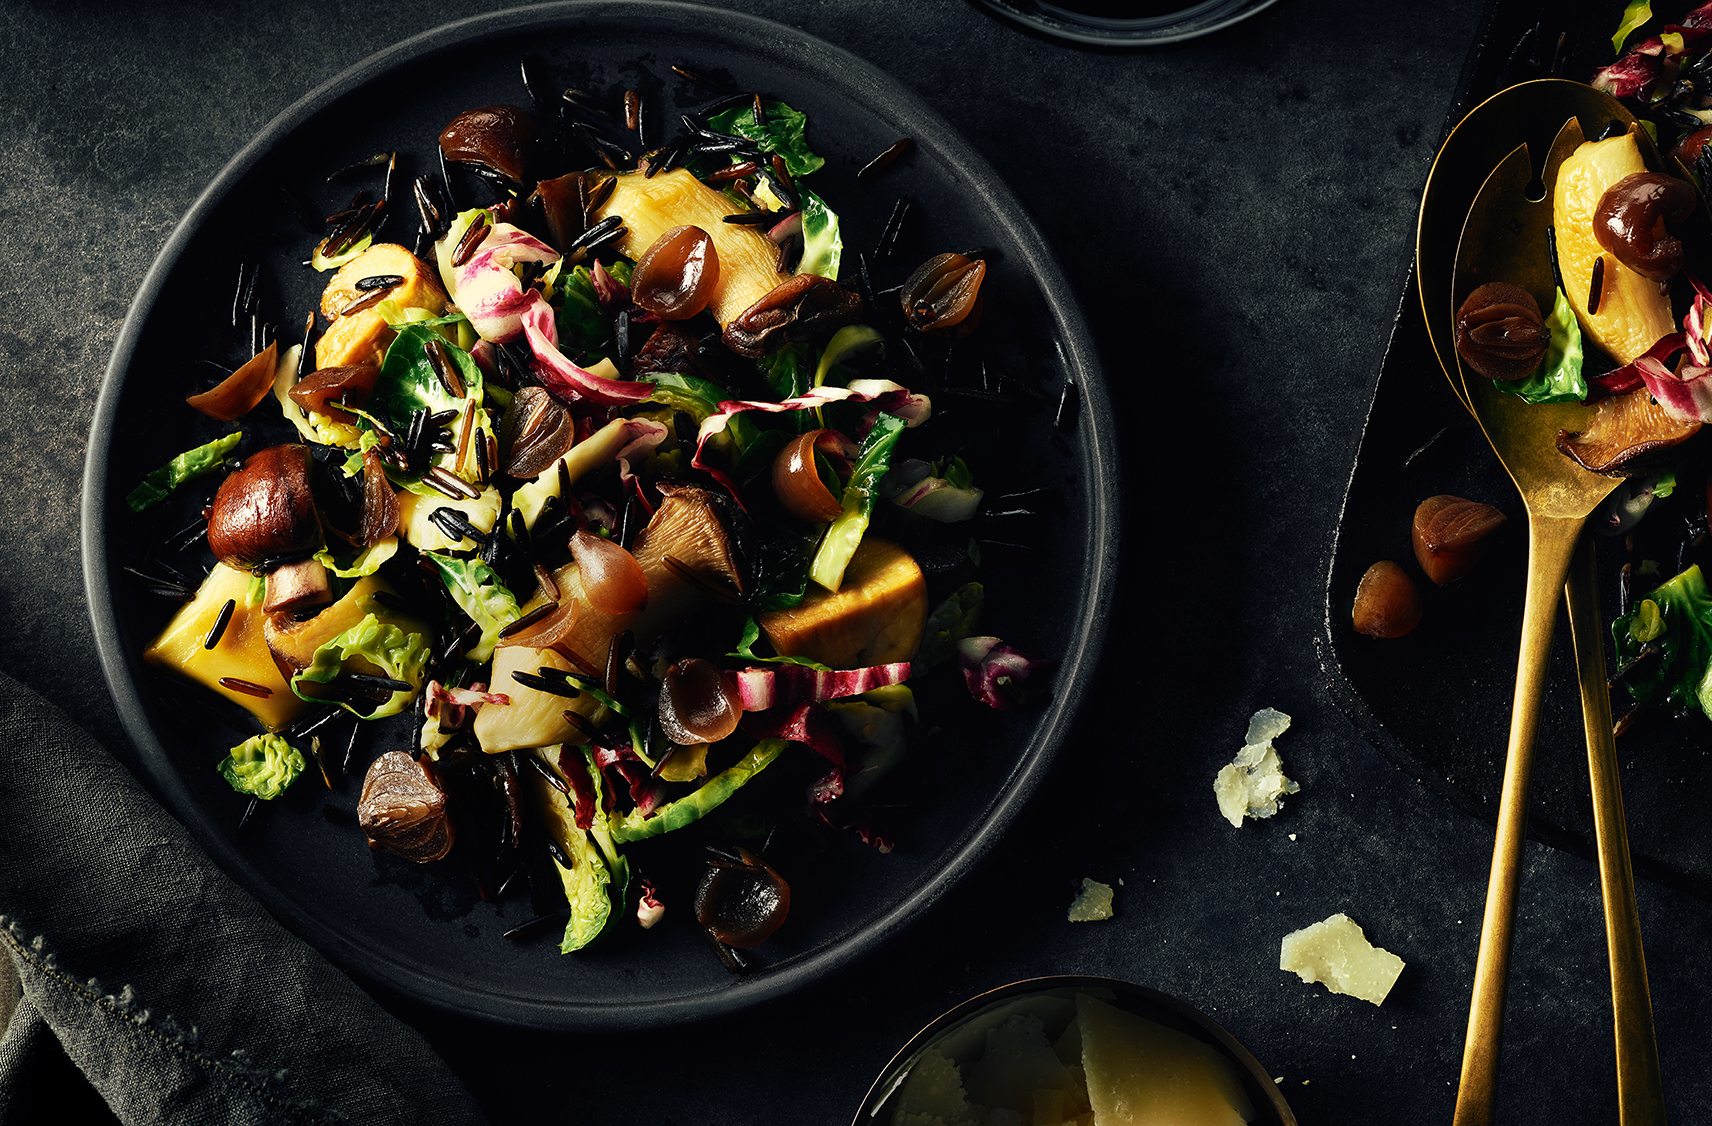 A salad of radicchio, greens, mushrooms, onions and rice fills a black bowl.
